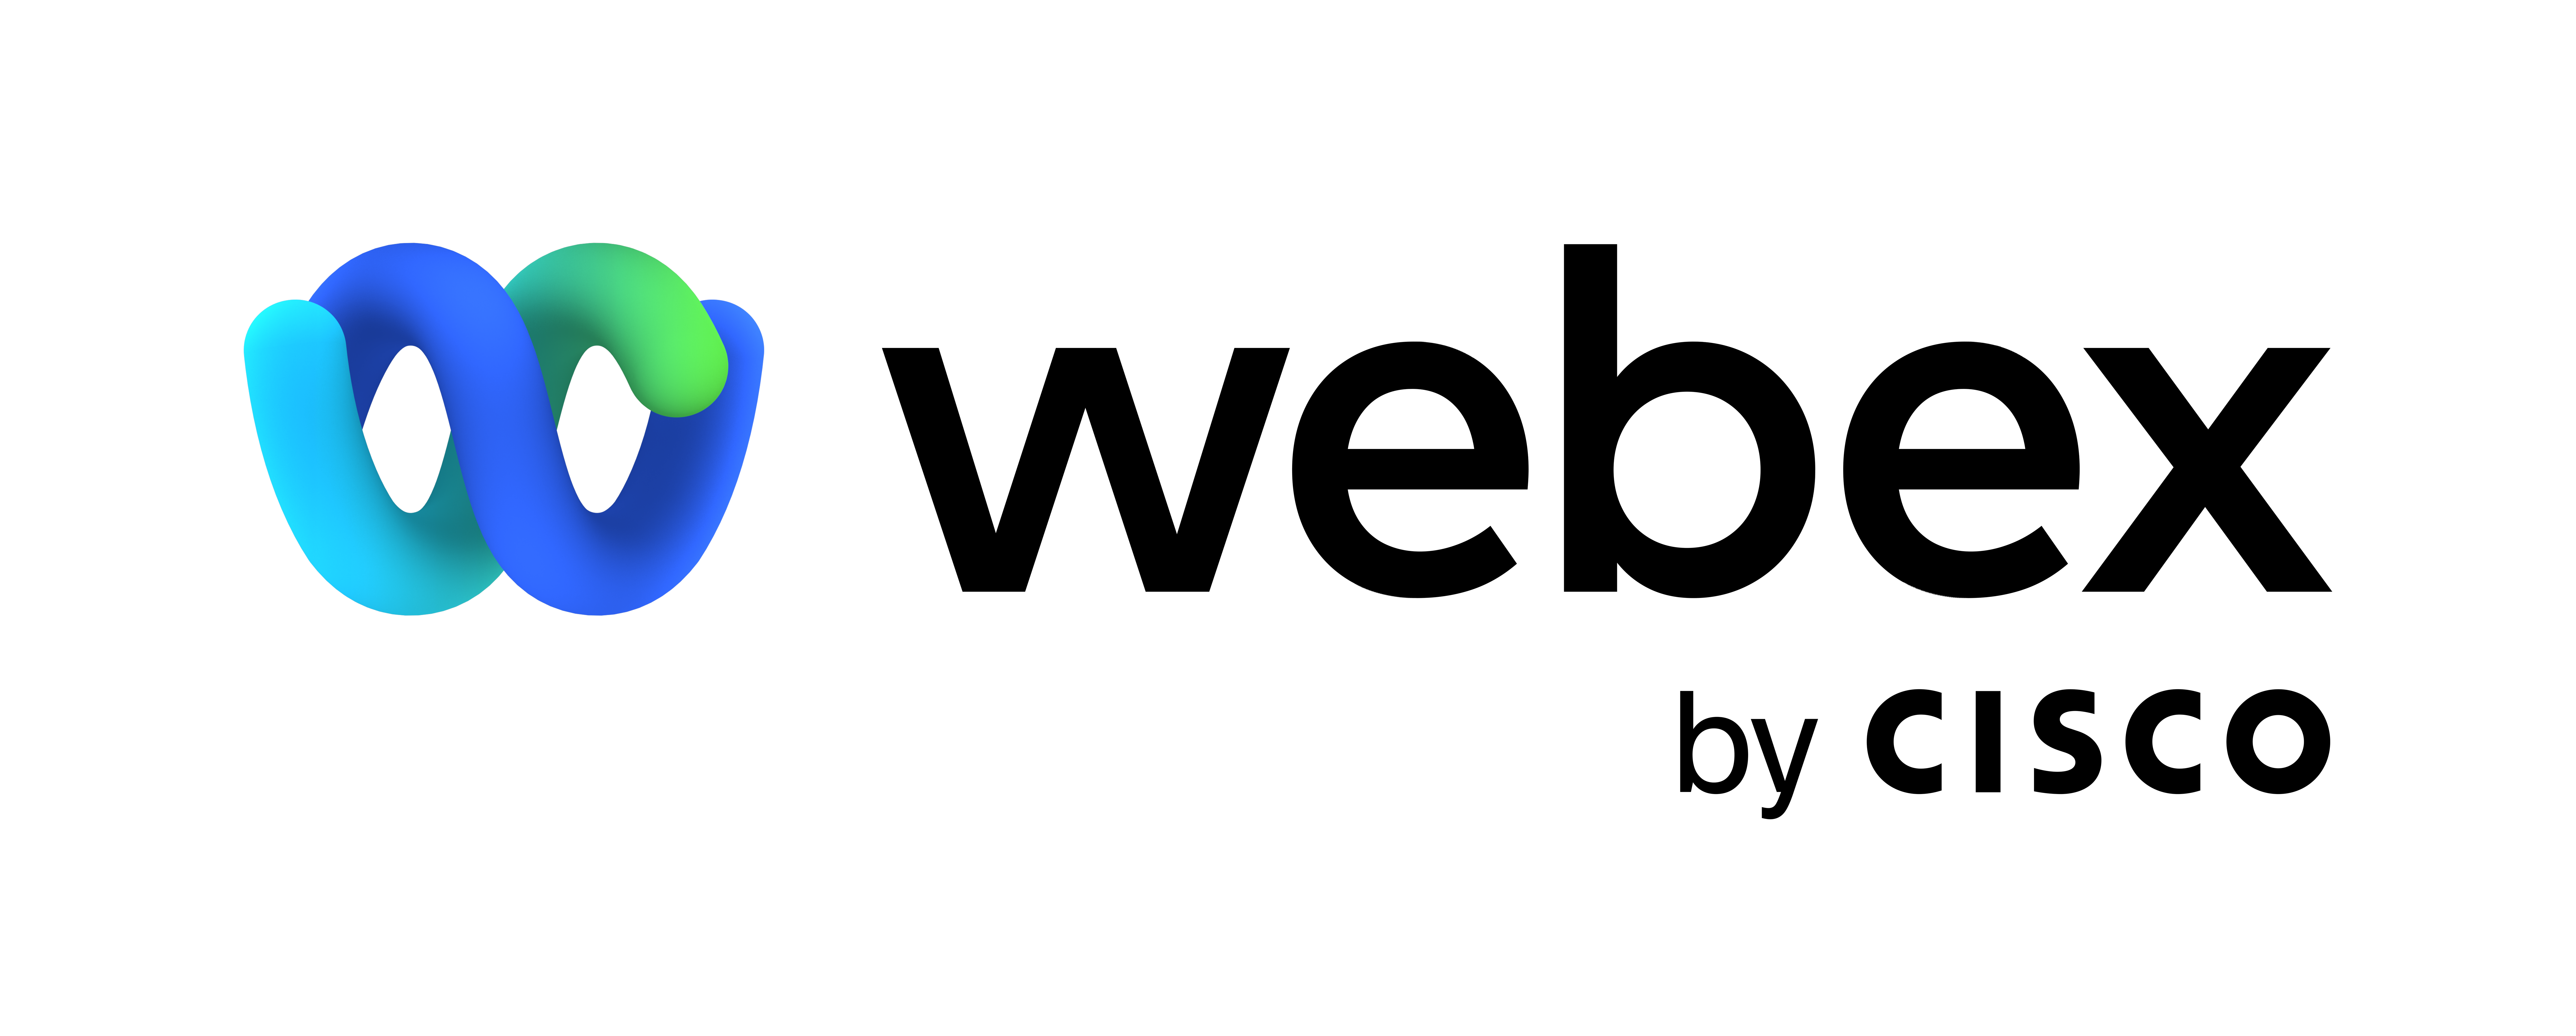 Webex by cisco logo